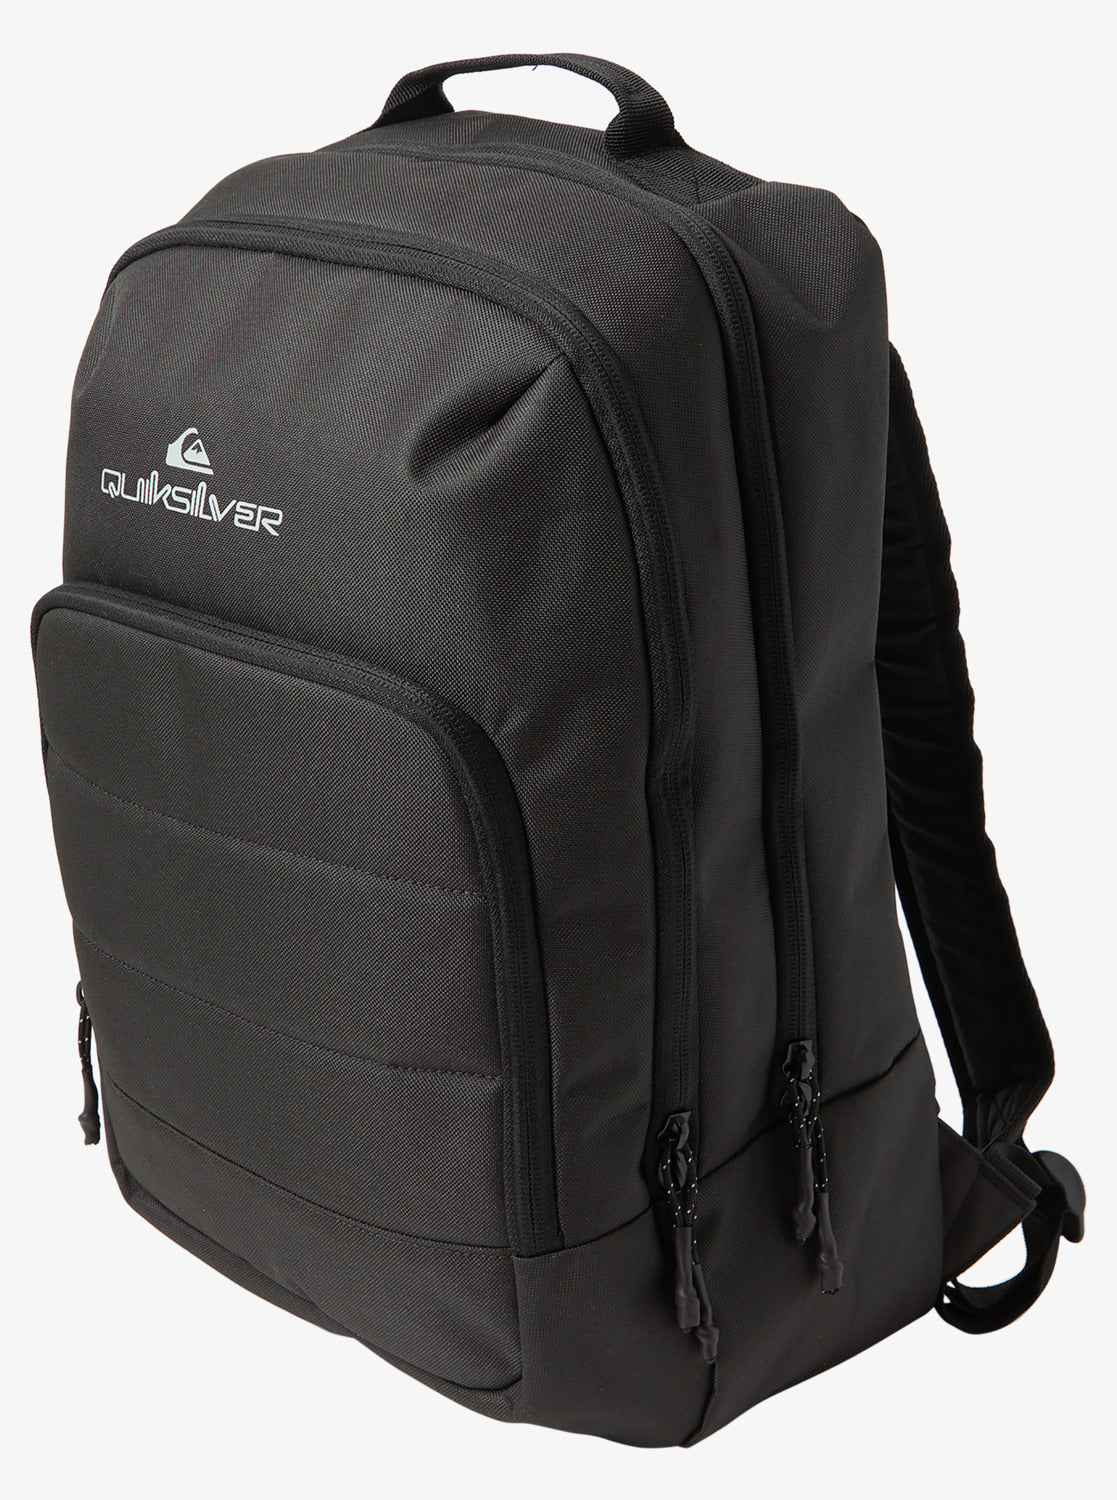 Quiksilver Burst 2.0 24 Litre Backpack in black colourway